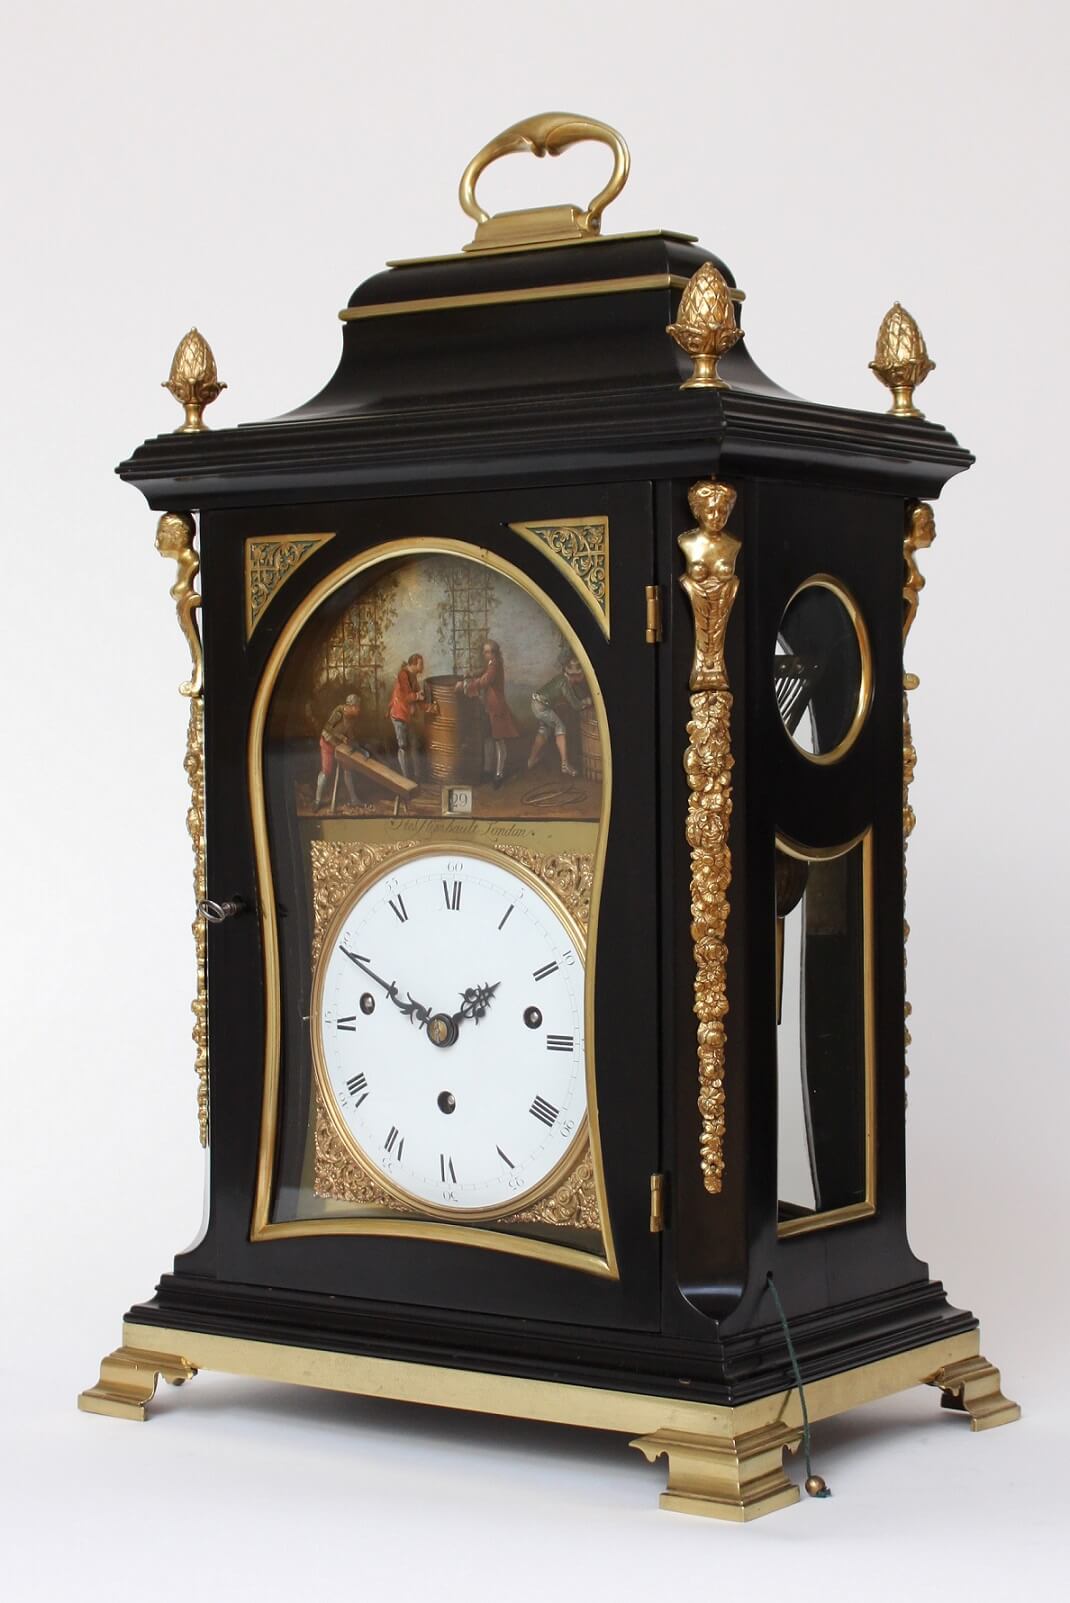 English-table clock-antique clock-musical-automaton-animated-Rimbault-London-striking